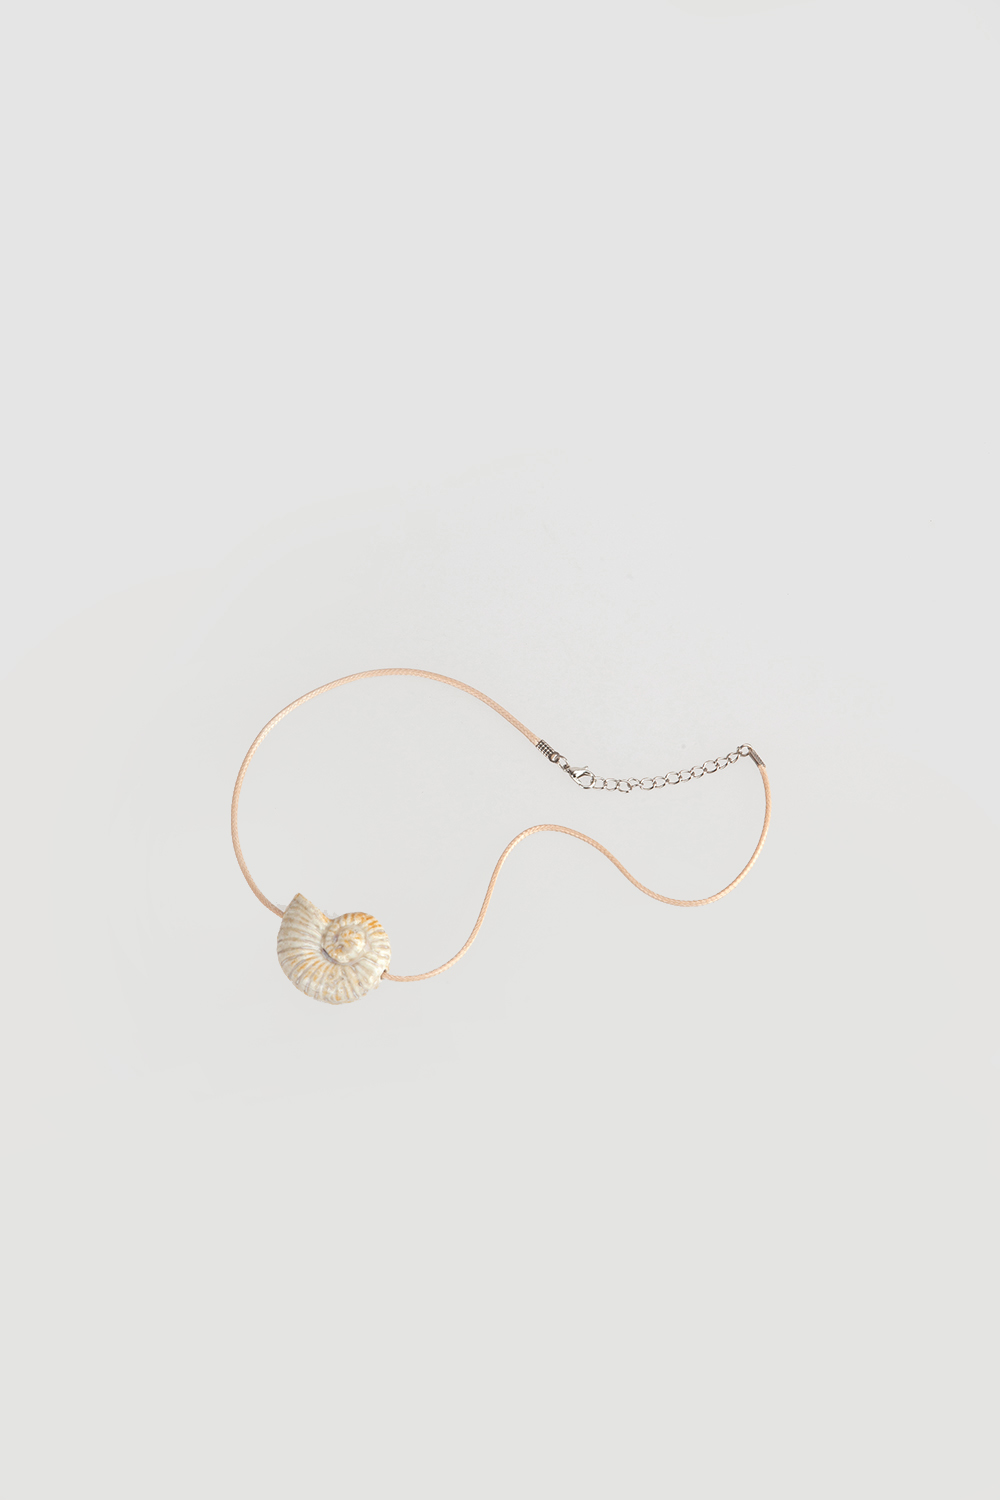 ammonite necklace